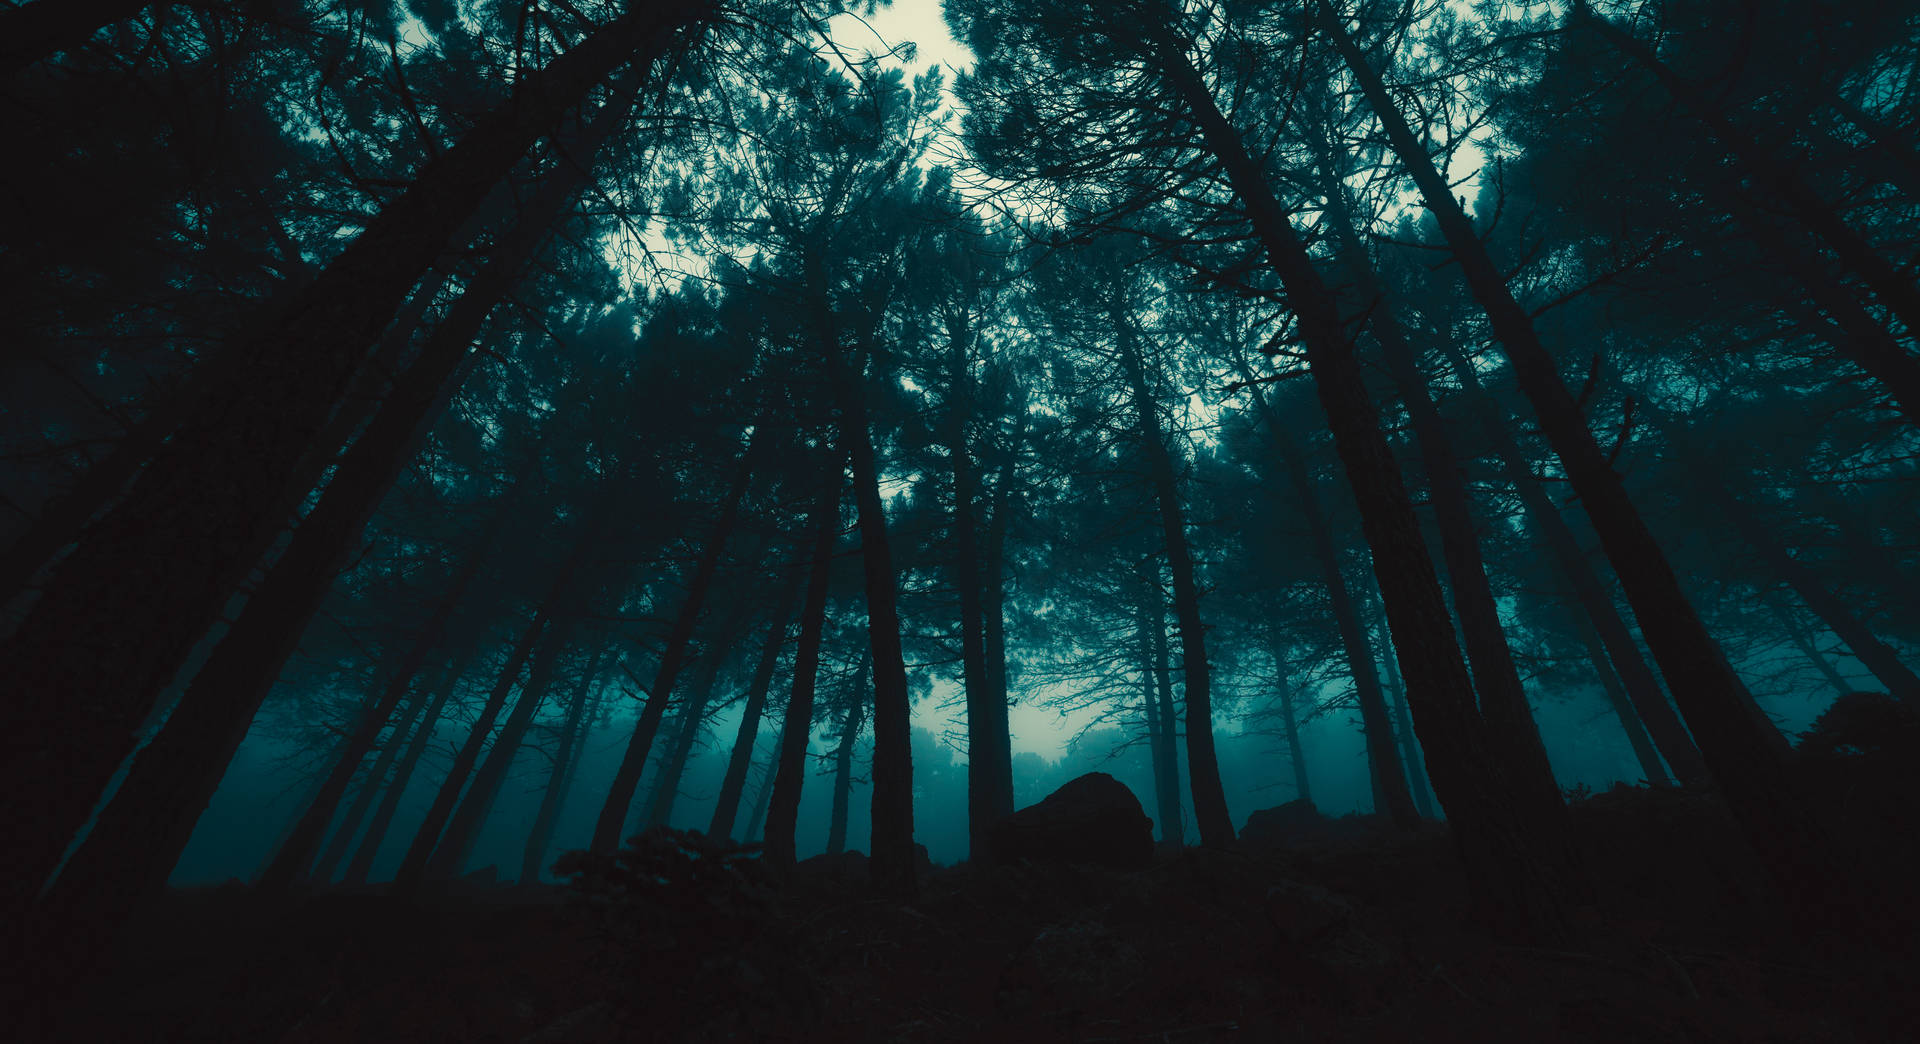 Caption: Dark Mysterious Forest Background